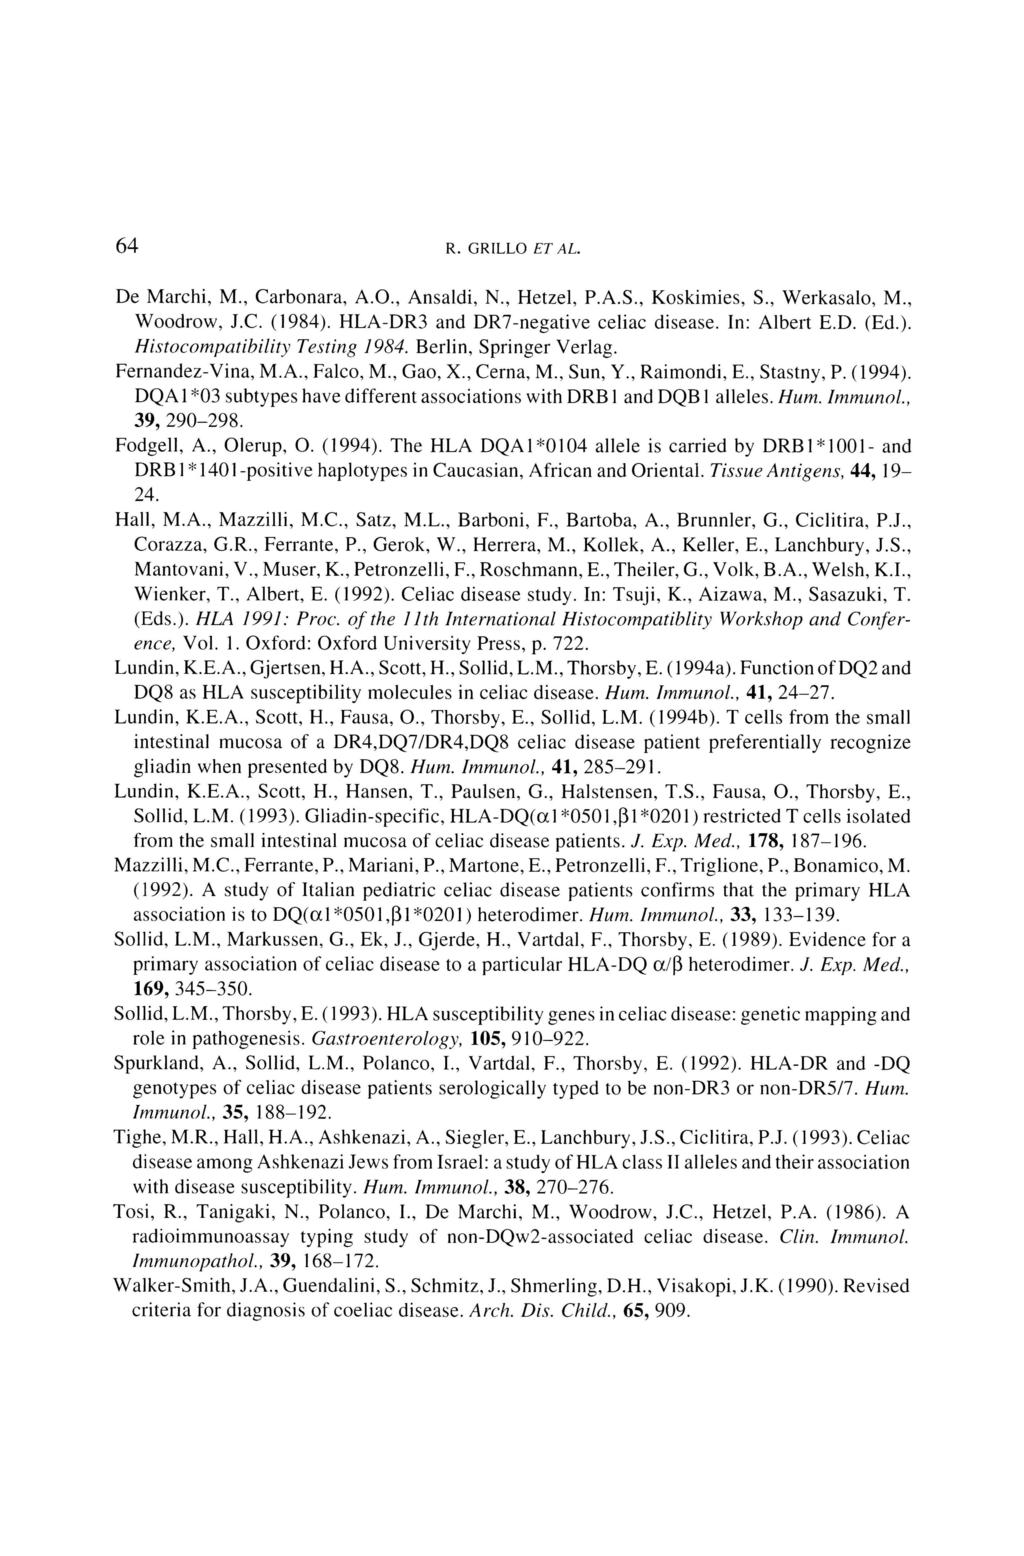 64 R. GRILLO ET AL. De Marchi, M., Carbonara, A.O., Ansaldi, N., Hetzel, P.A.S., Koskimies, S., Werkasalo, M., Woodrow, 1.e. (1984). HLA-DR3 and DR7-negative celiac disease. In: Albert E.D. (Ed.). Histocompatibility Testing 1984.